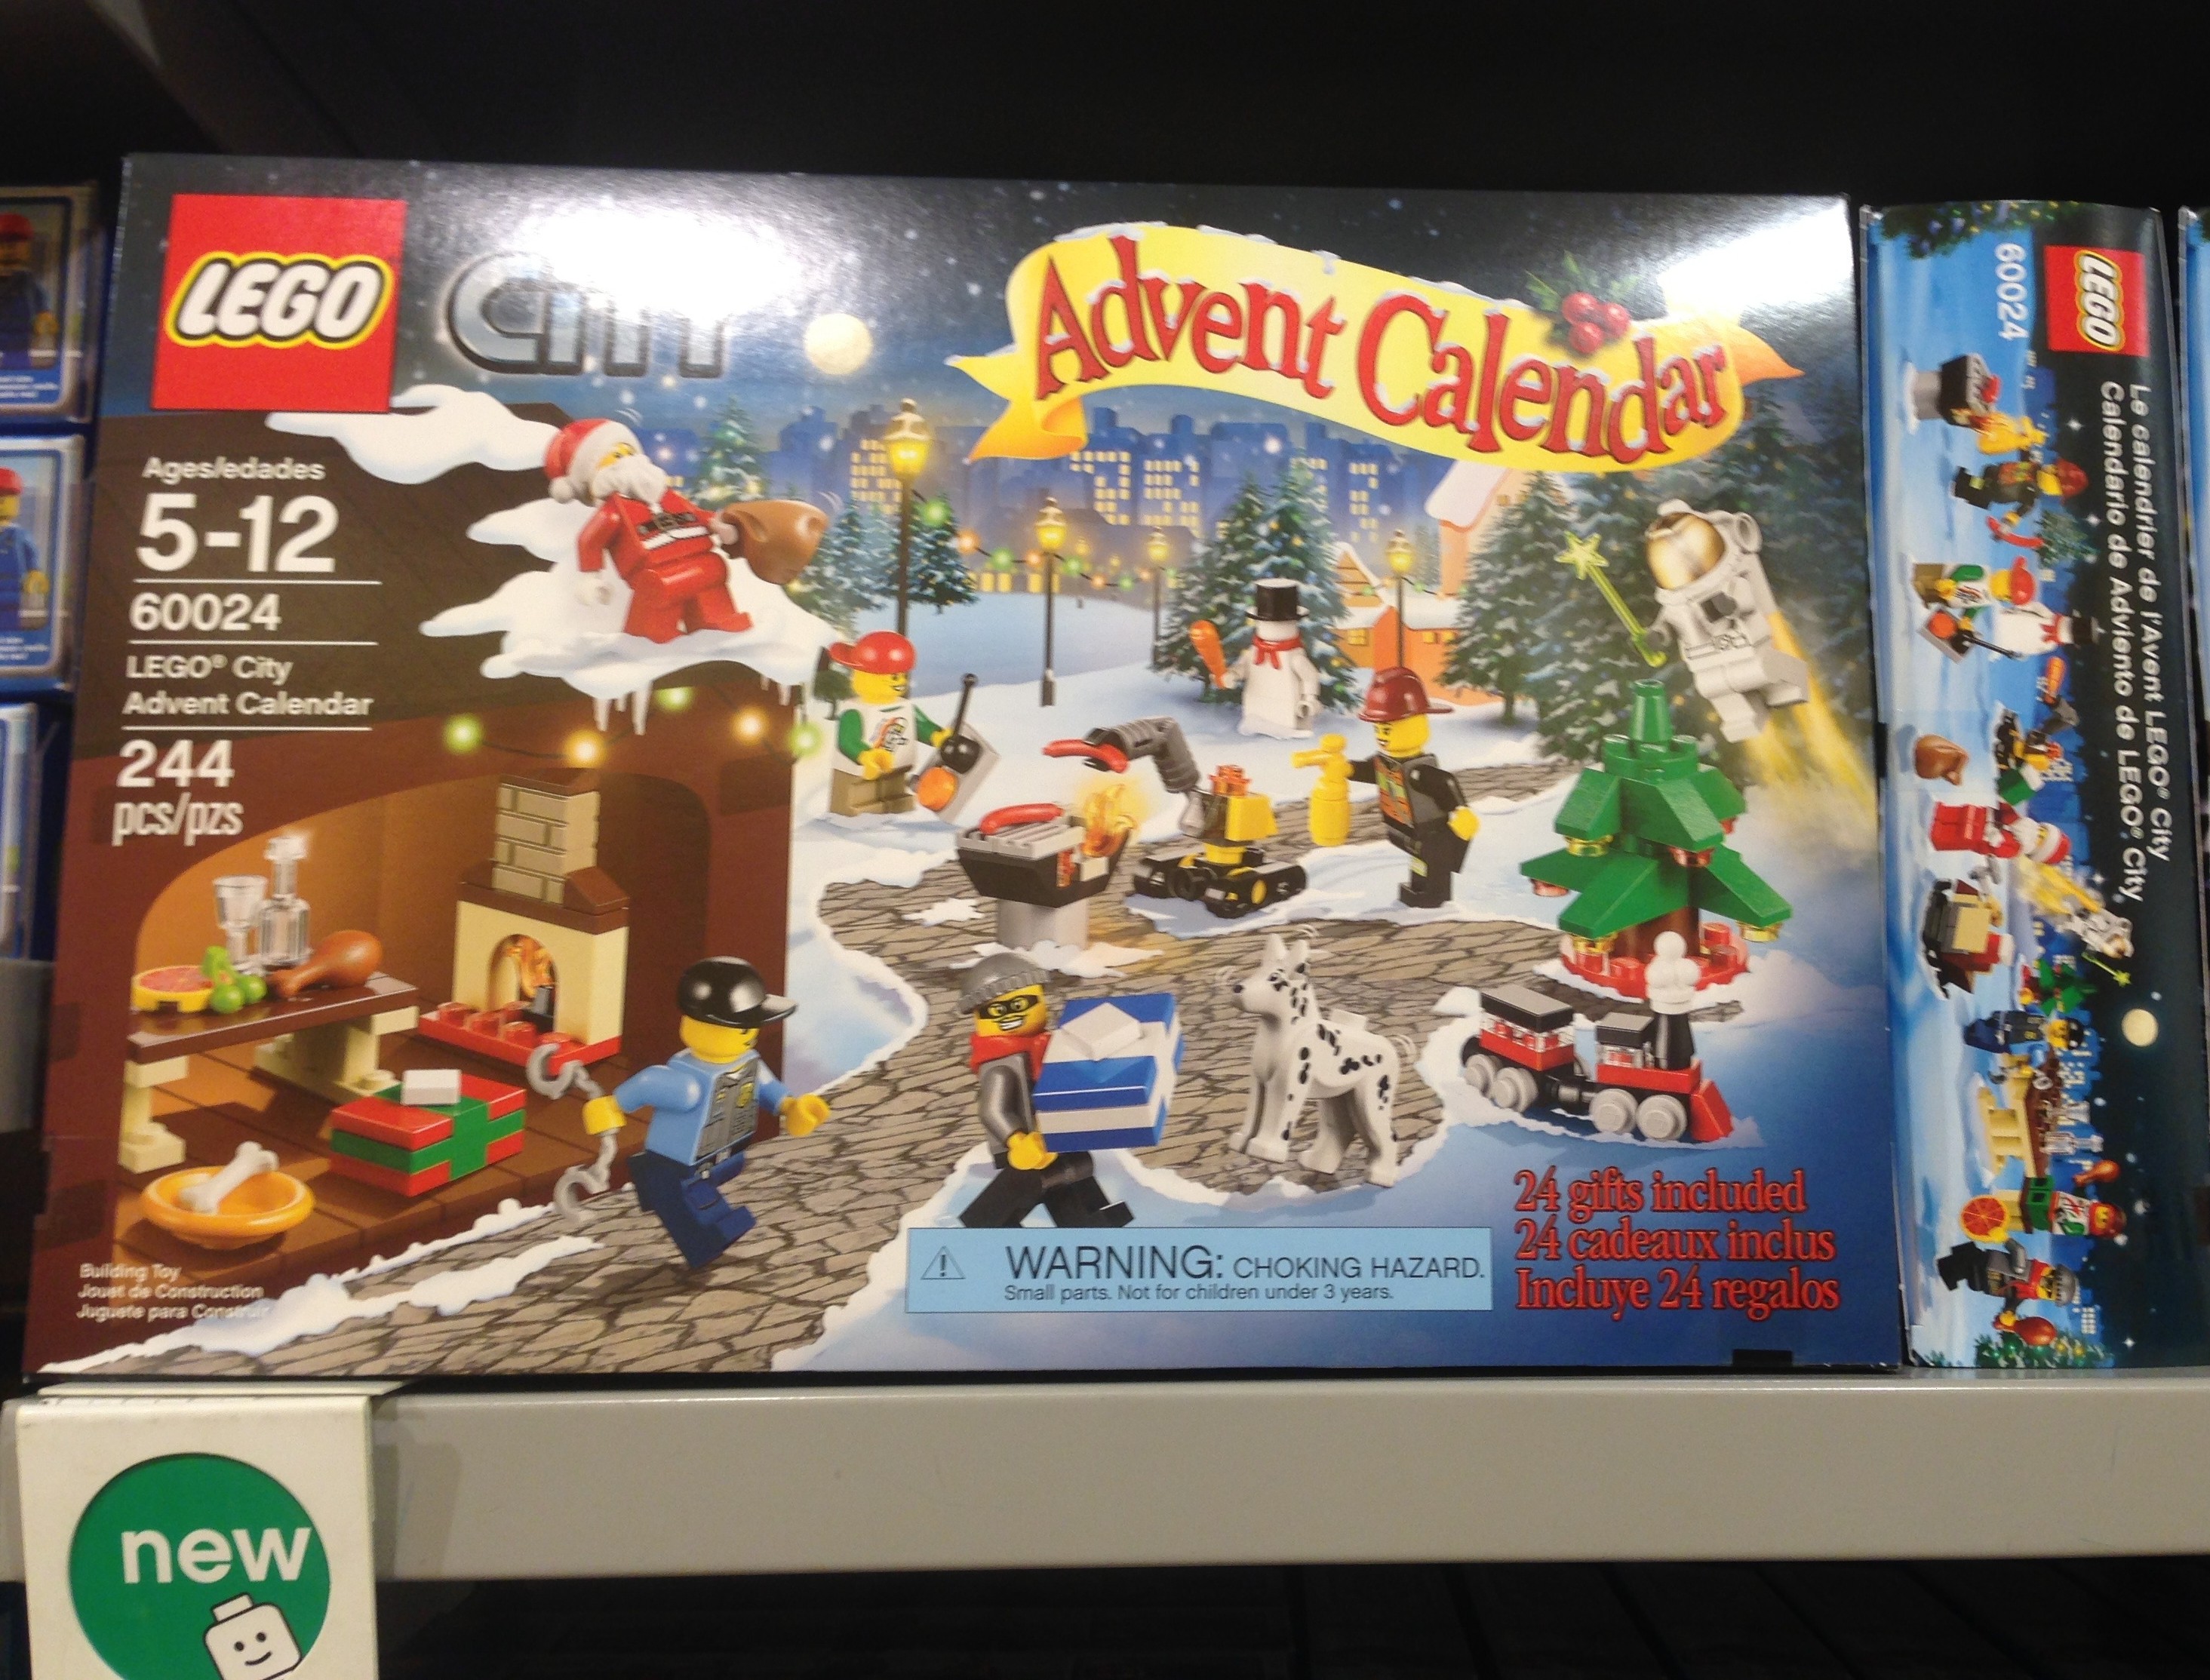 2013 LEGO City Advent Calendar 60024 Set Released in Stores! Bricks